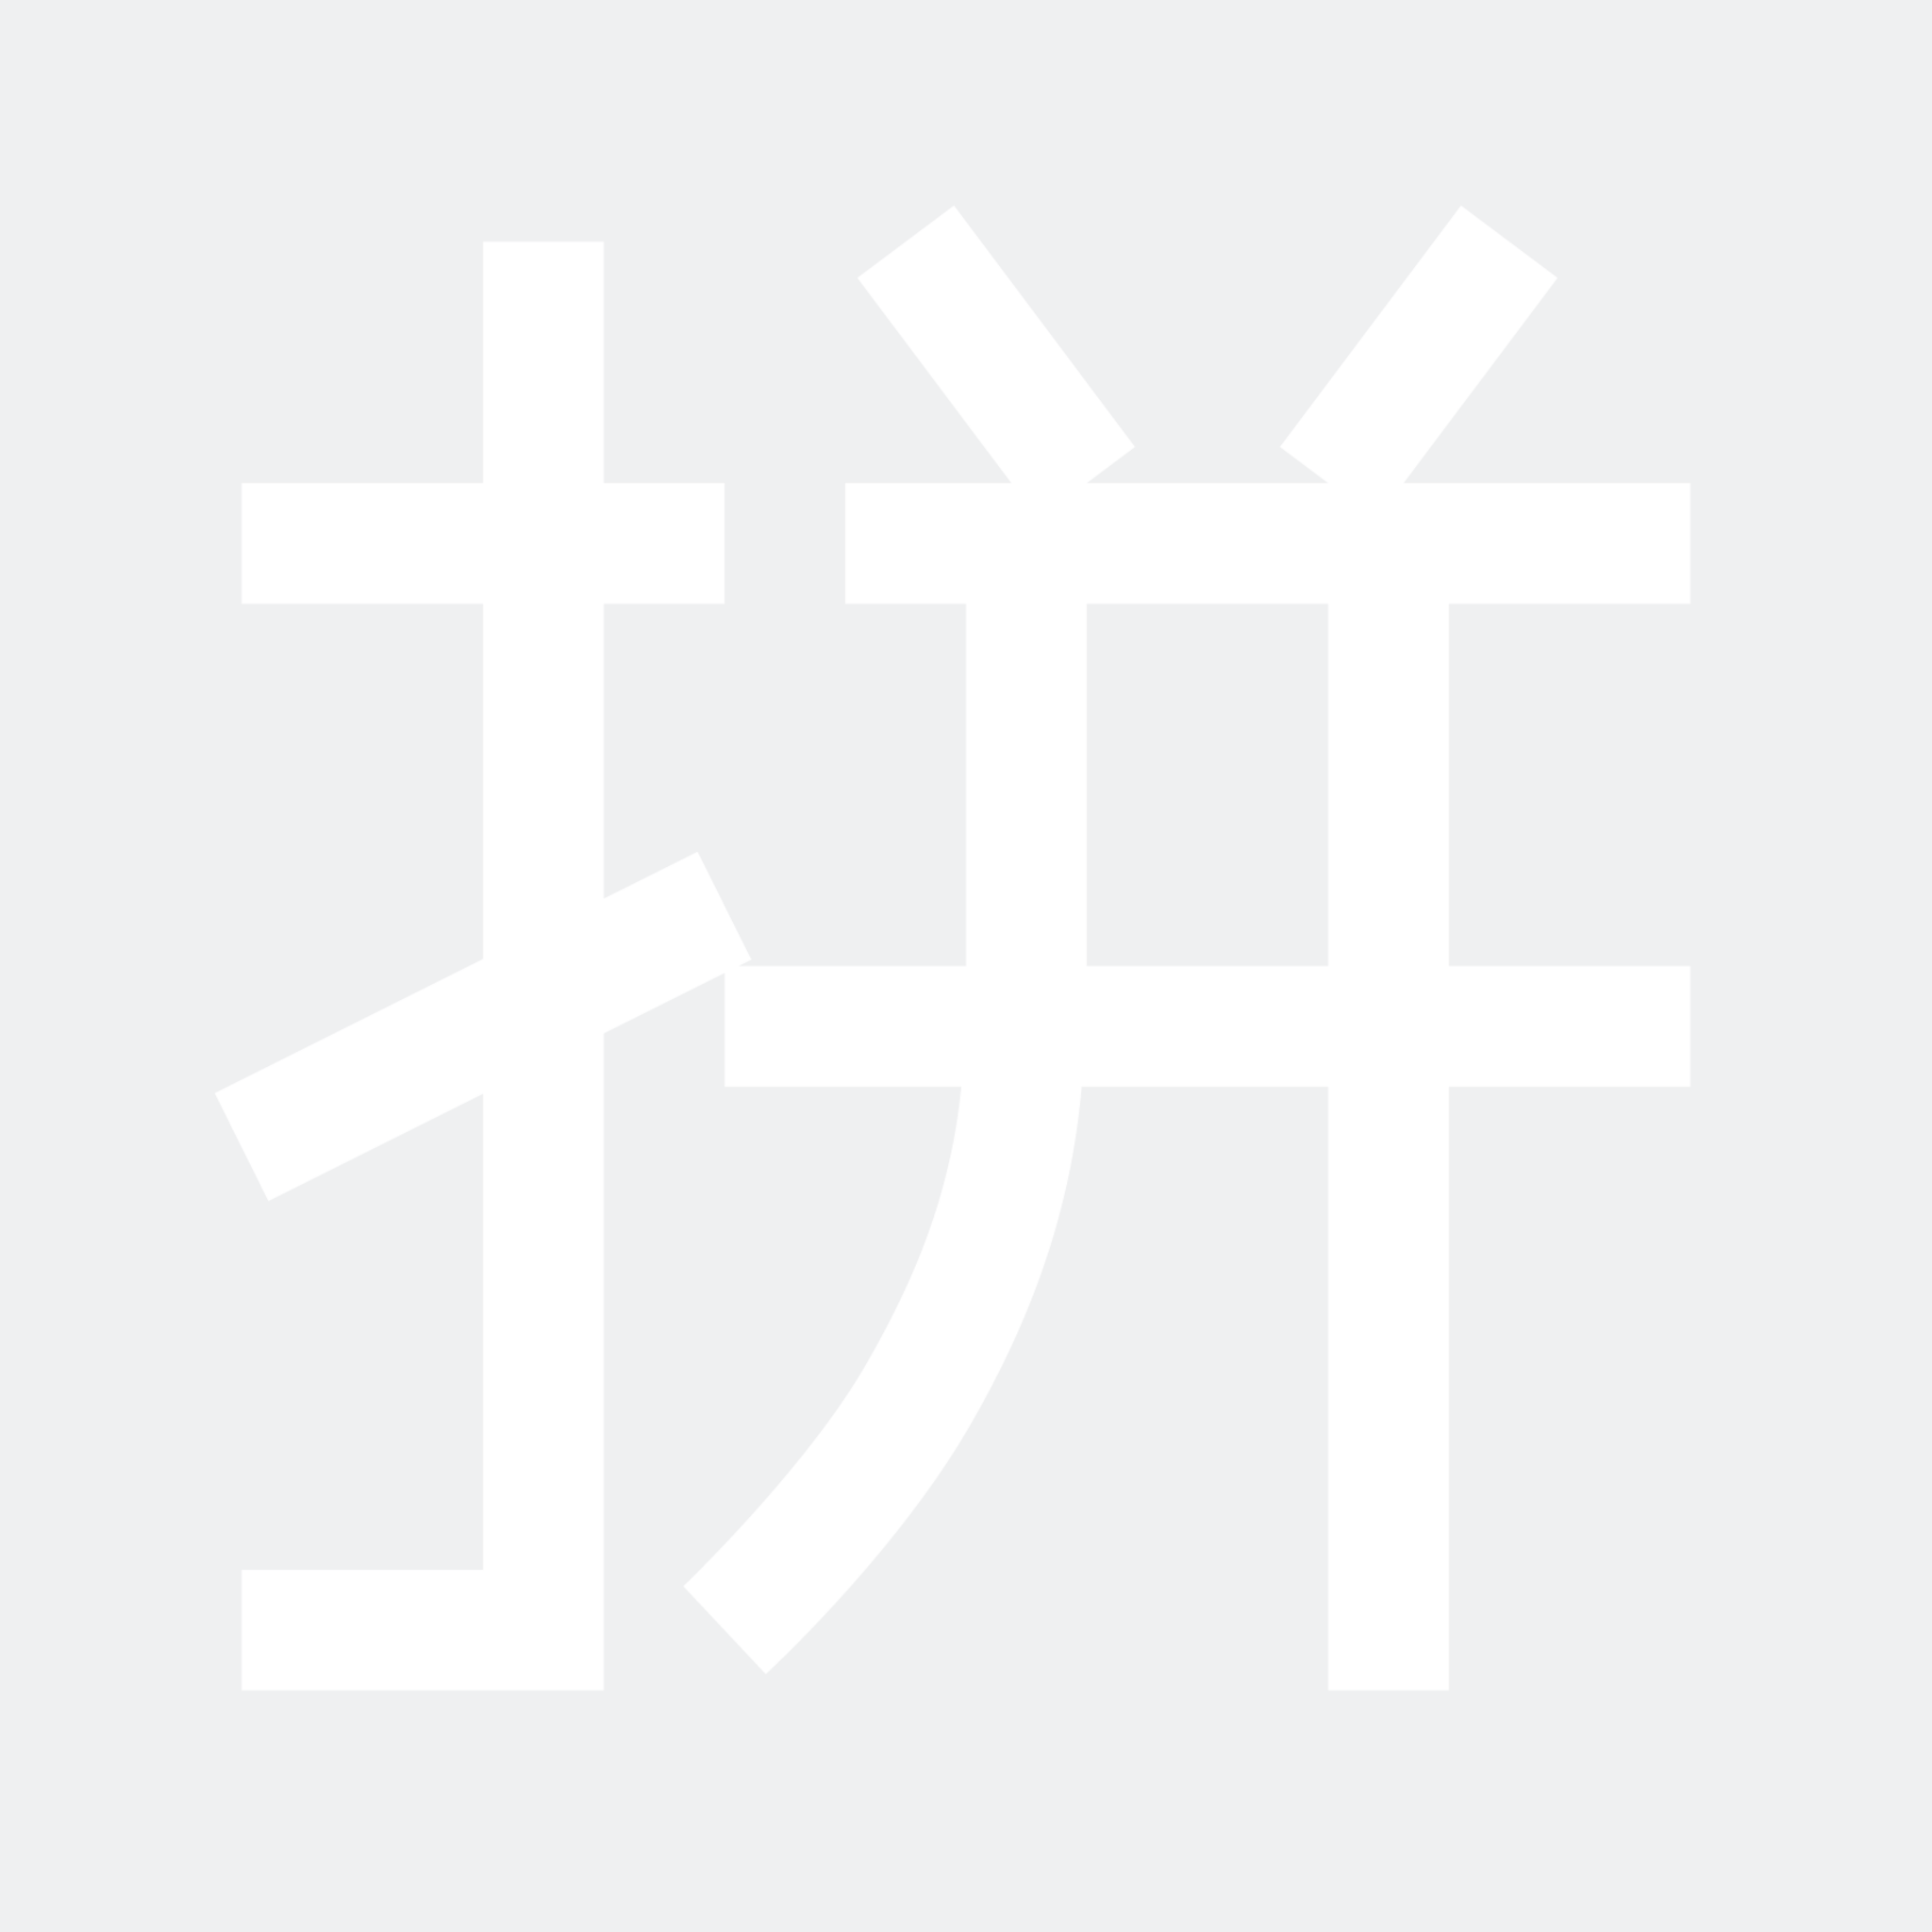 fcitx pinyin libpinyin icon